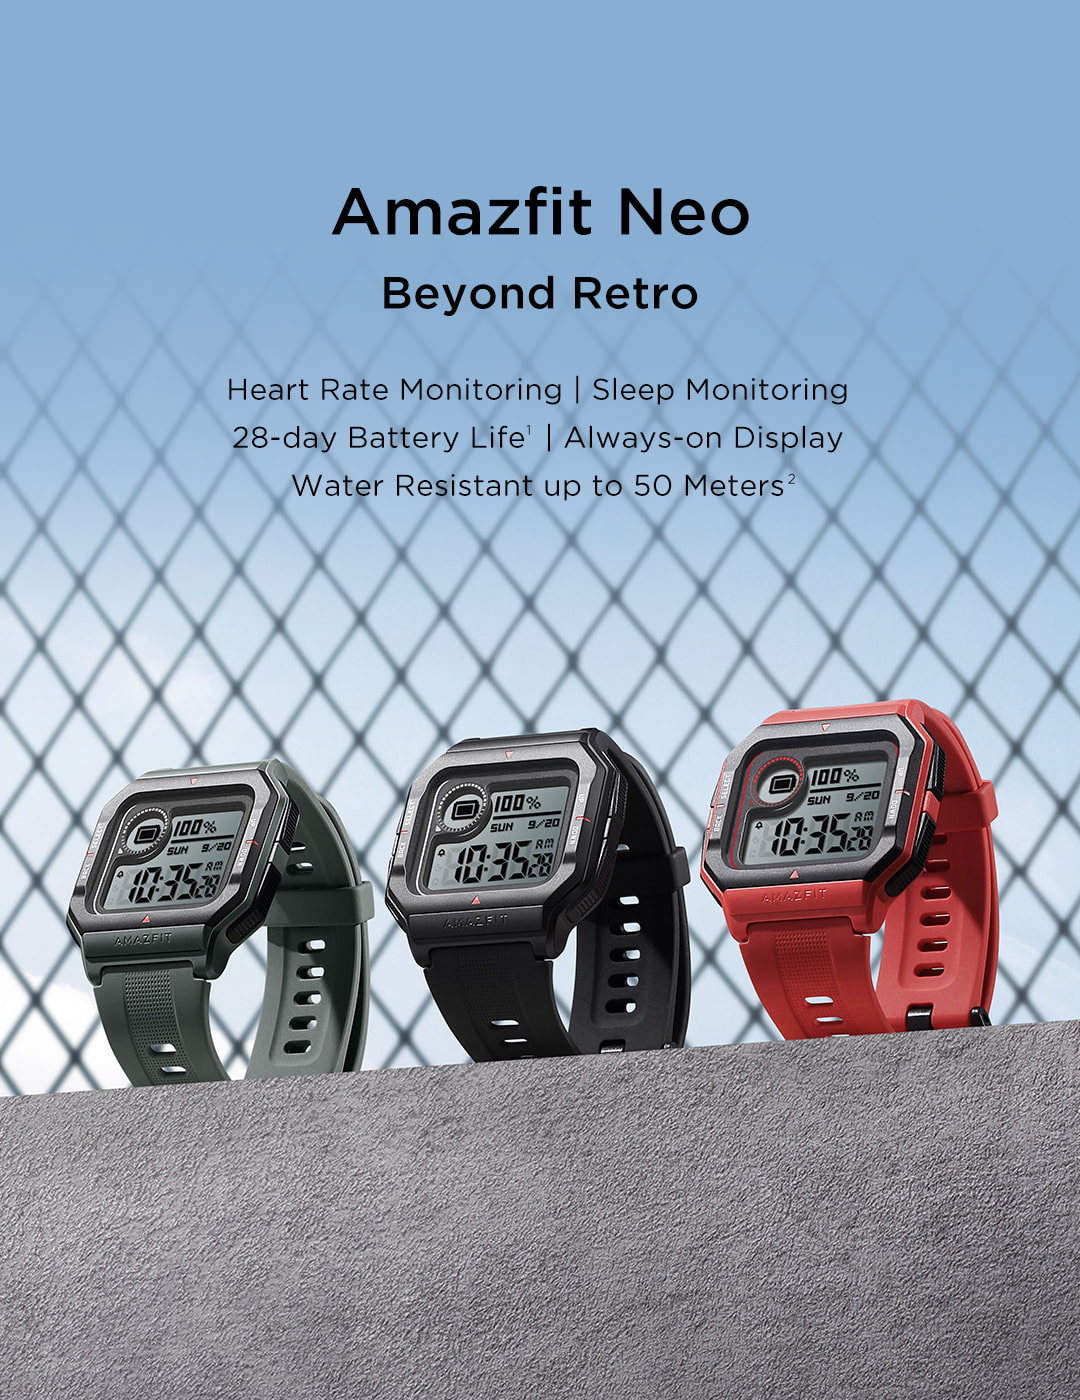 Amazfit Neo | Retro Design with Advanced Feature